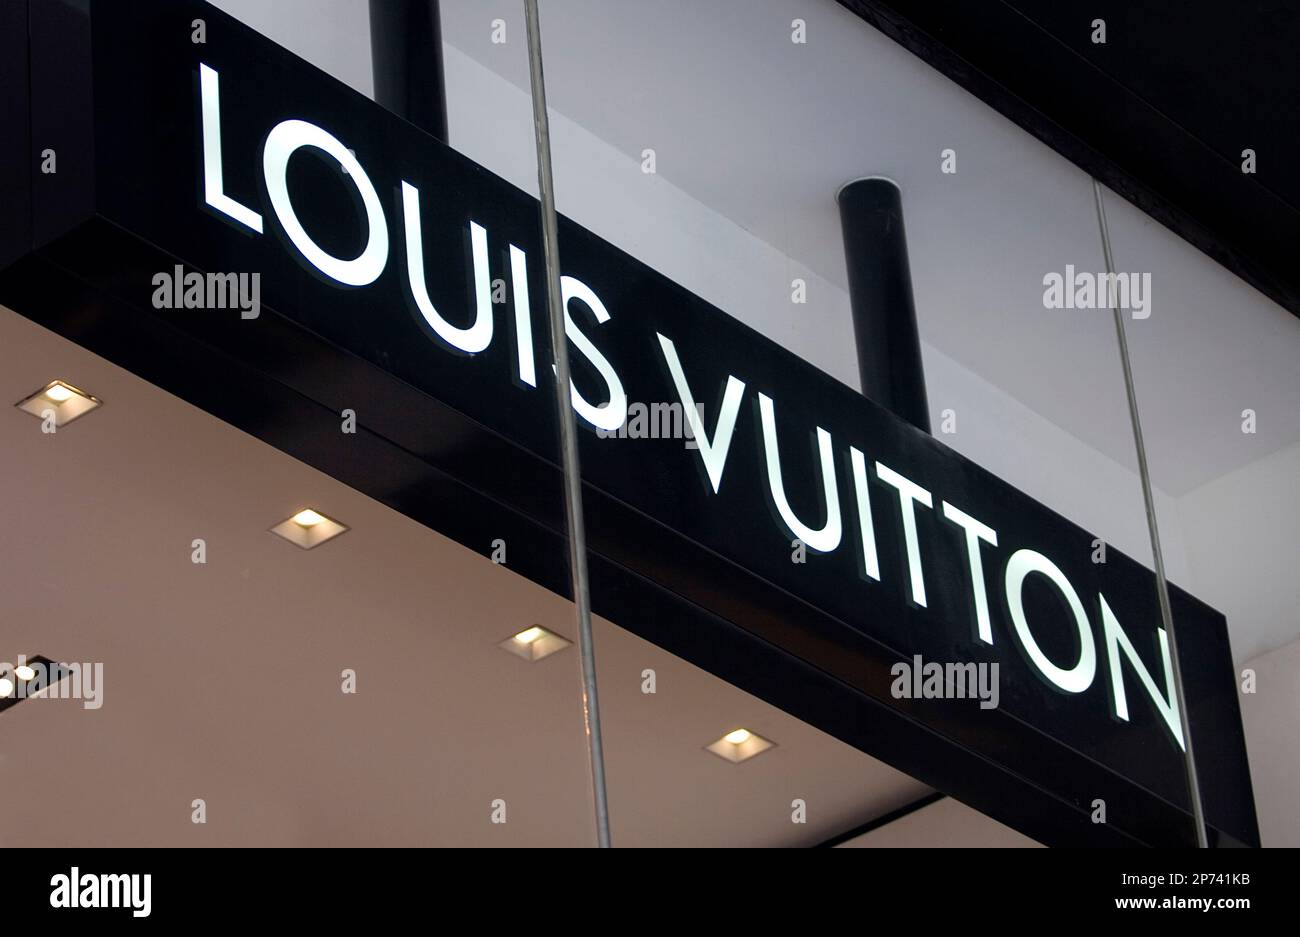 Louis Vuitton London Sloane Street Store, United Kingdom